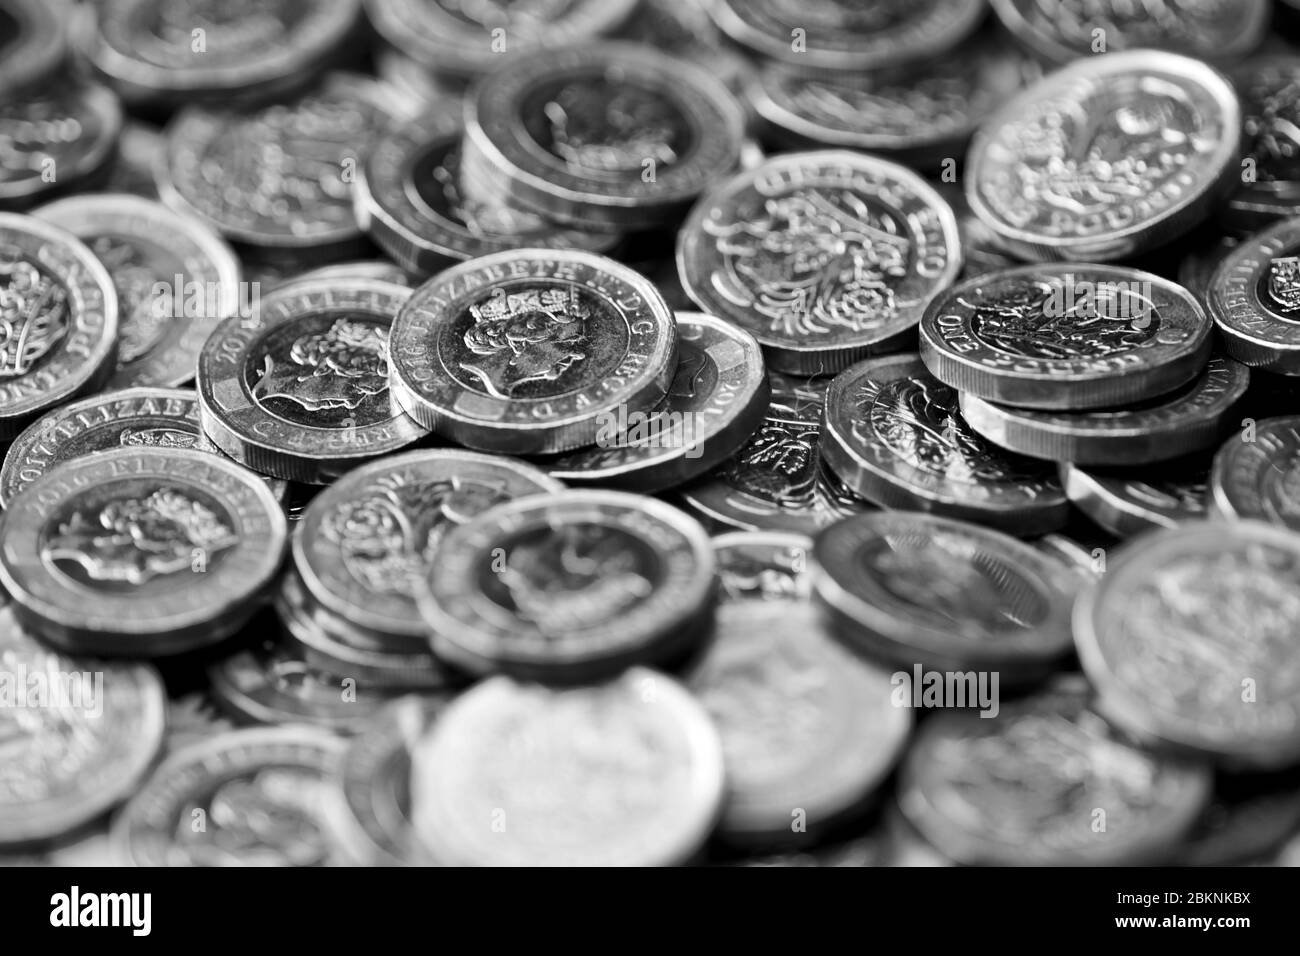 British One Pound Coins Stock Photo